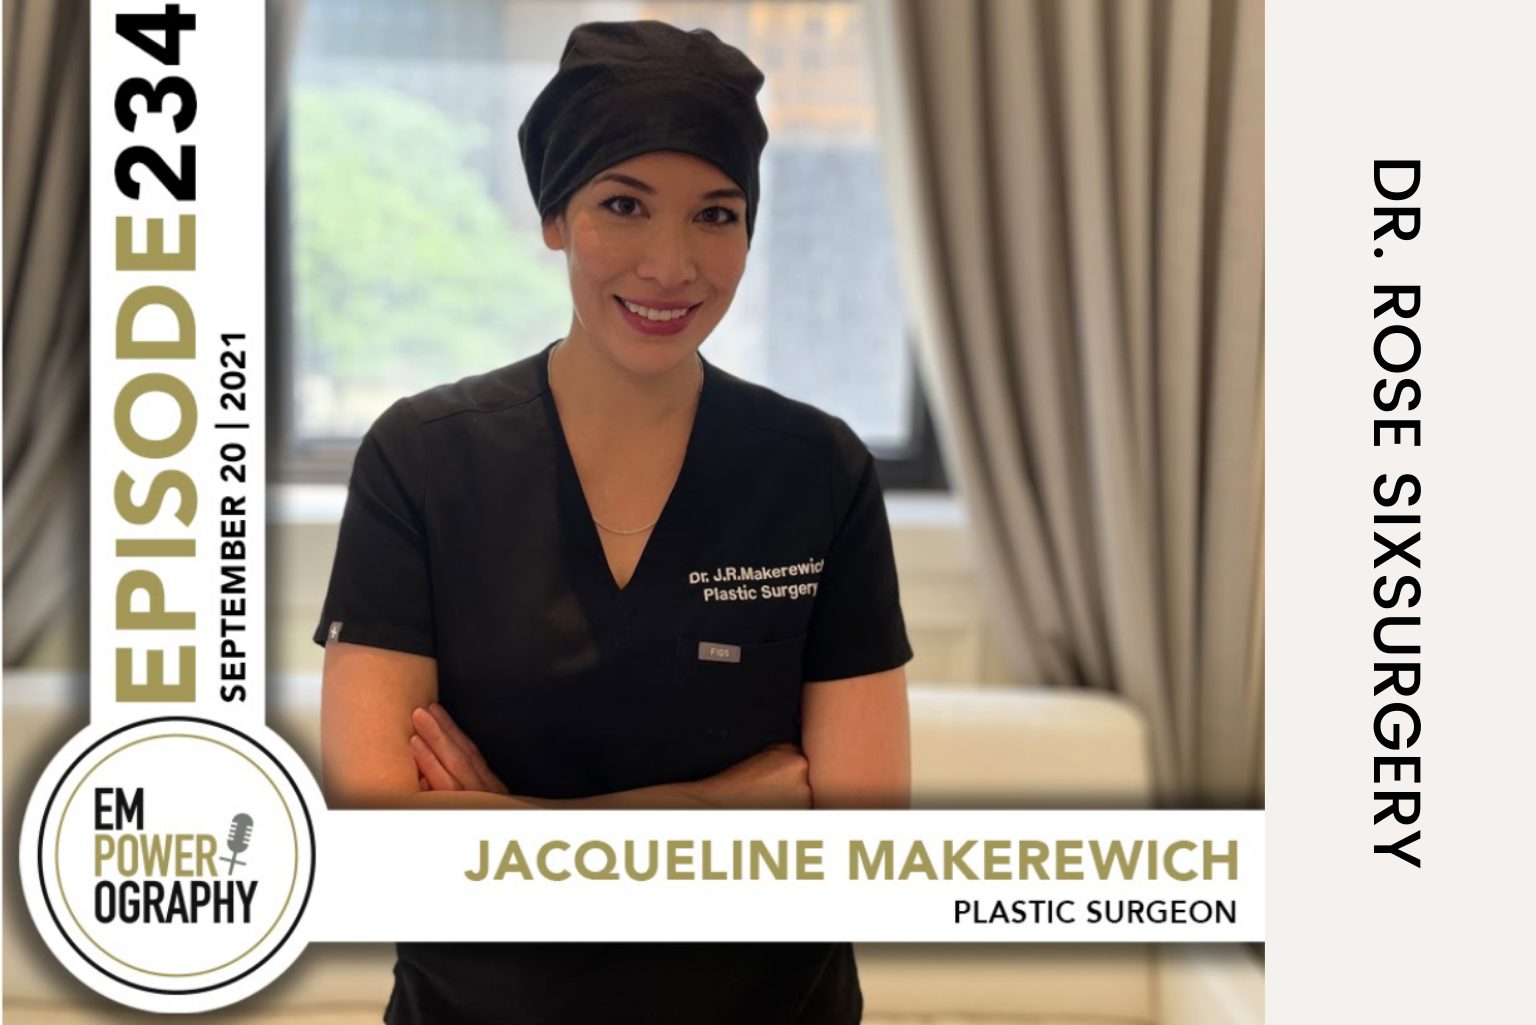 Dr Rose makerewich plastic surgeon empowerography